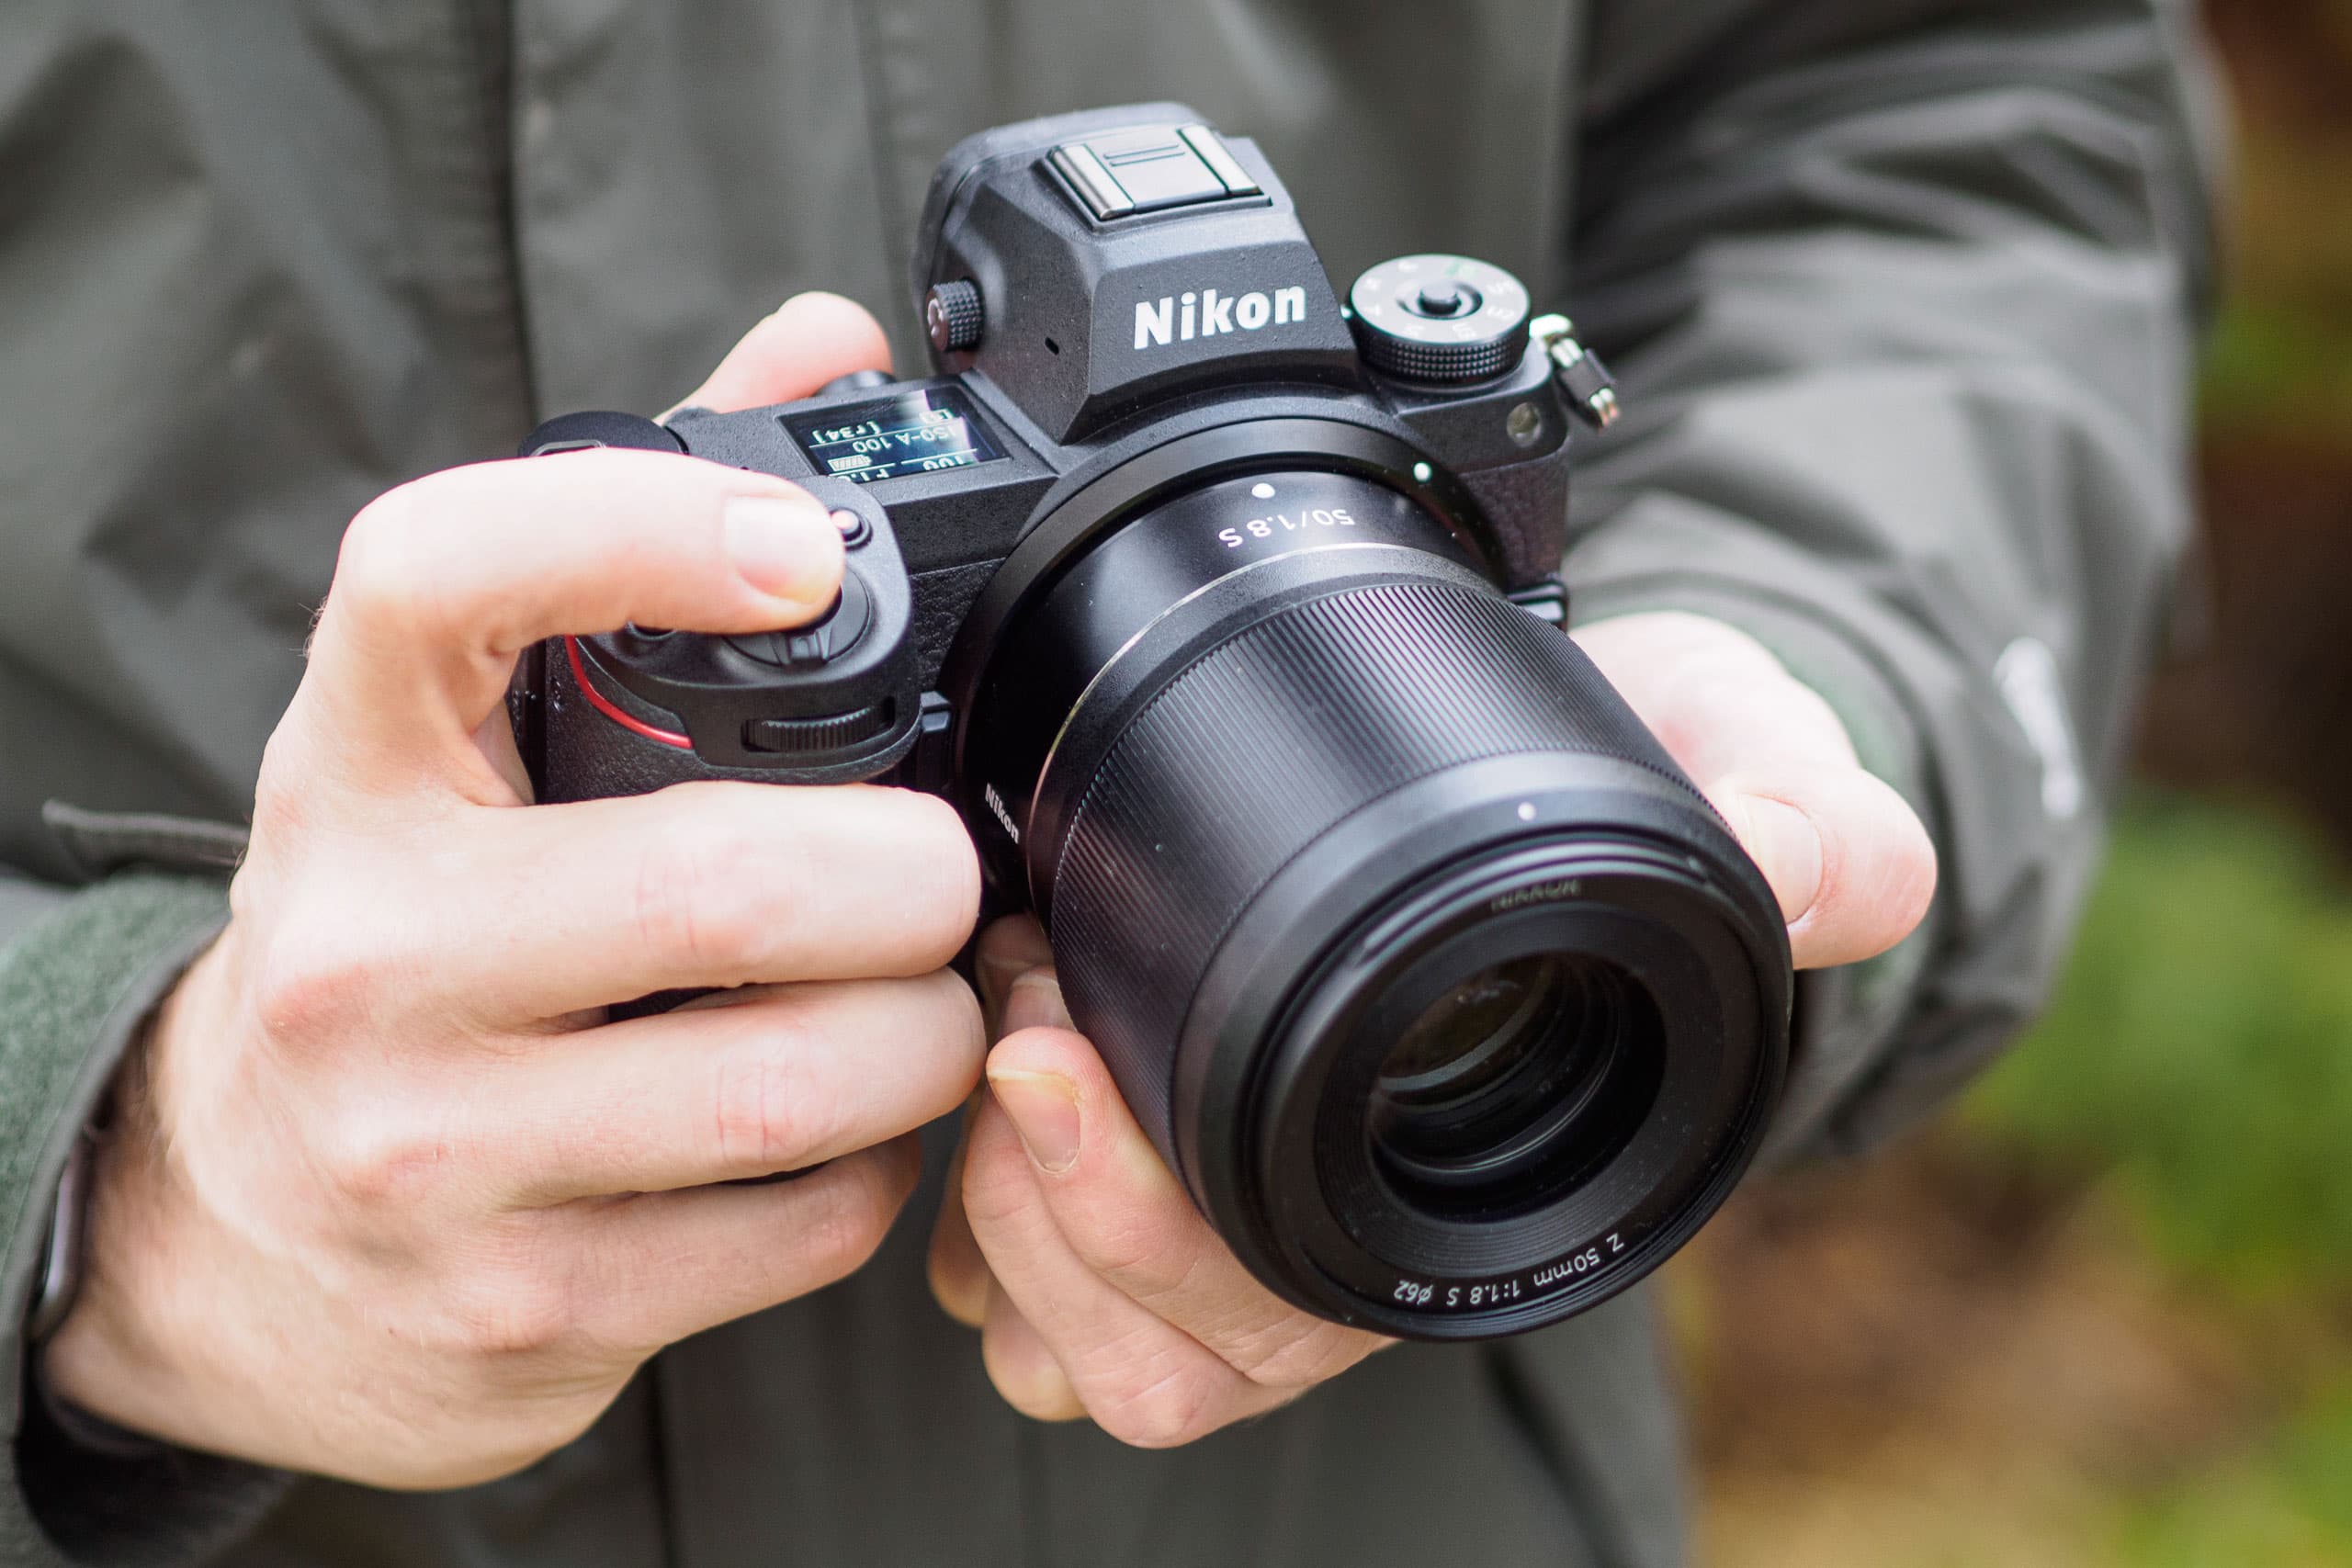 Nikon Z6 II: Digital Photography Review